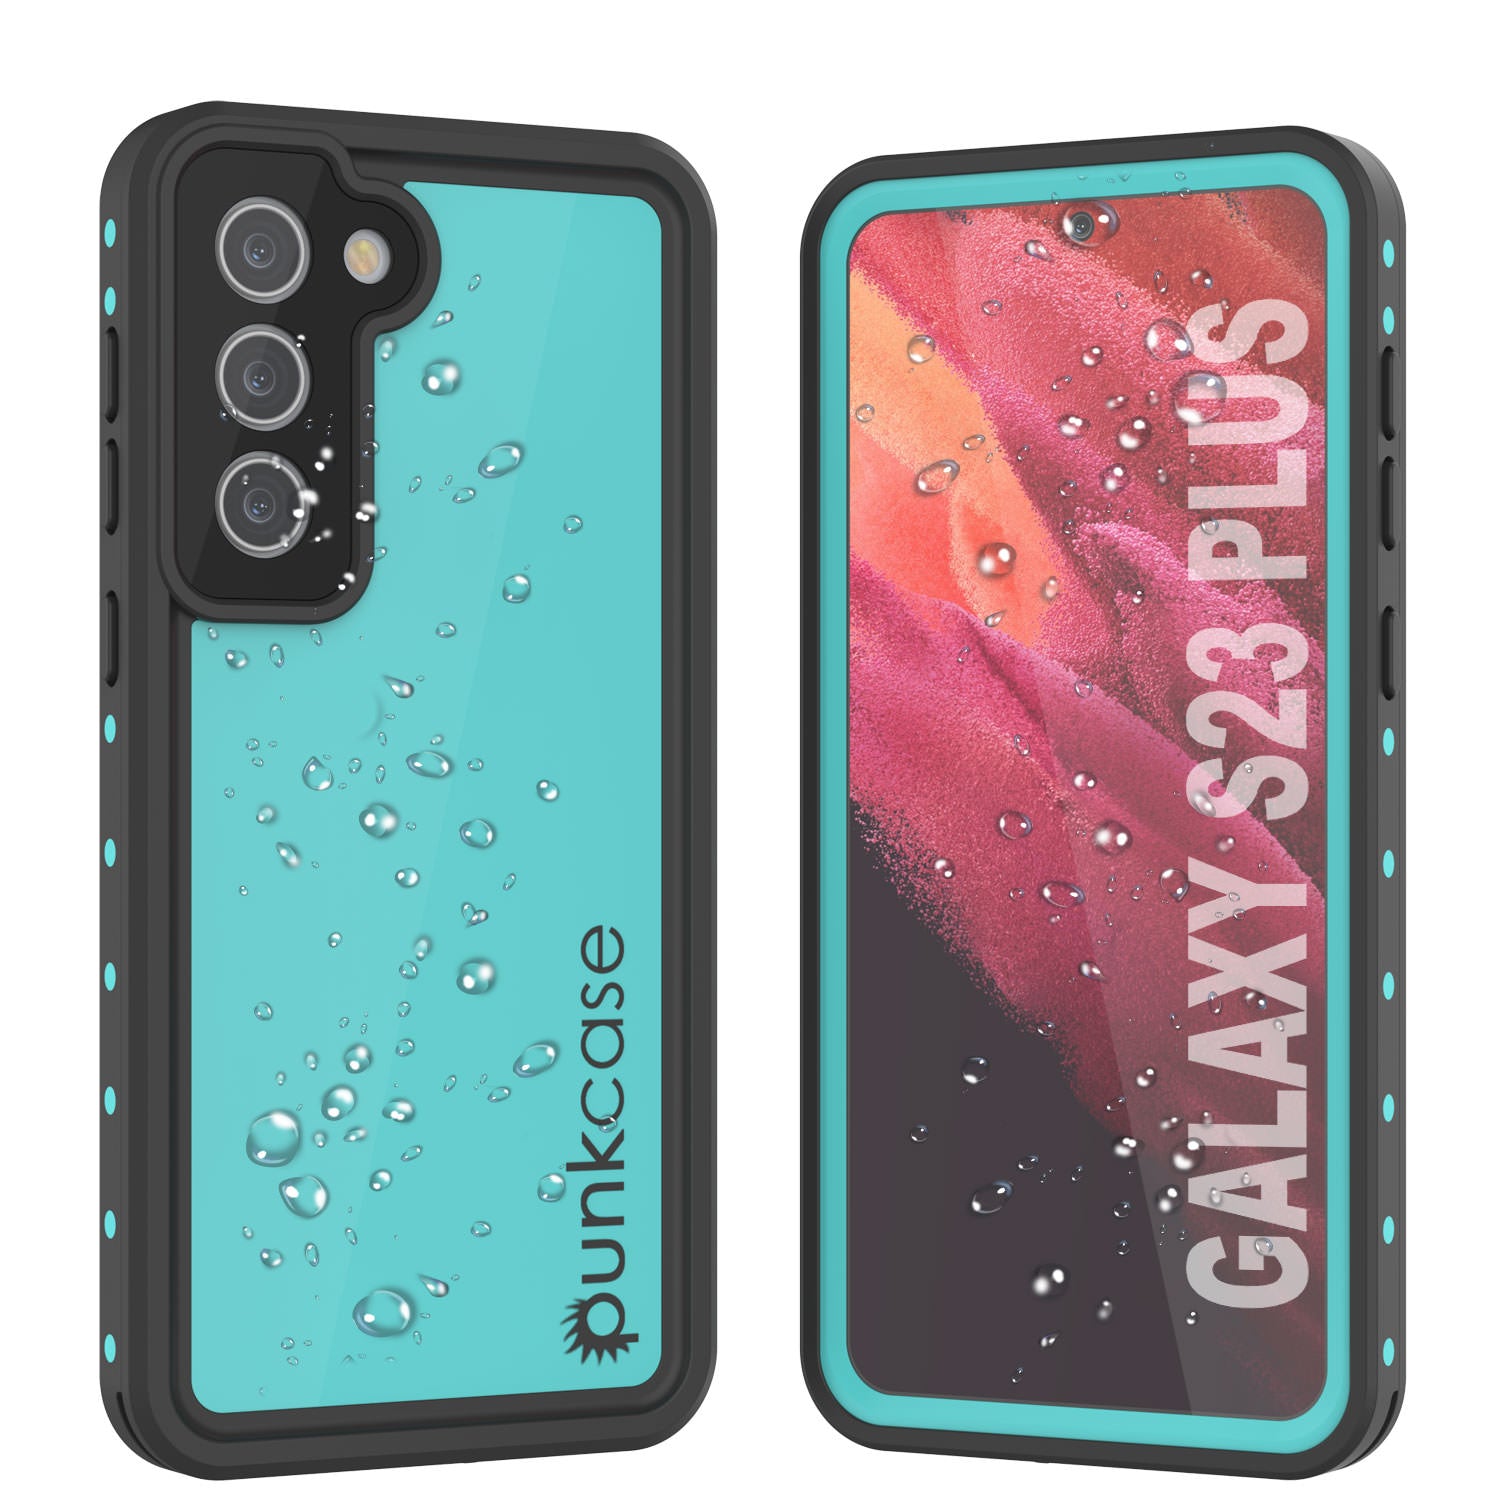 Galaxy S24+ Plus Waterproof Case PunkCase StudStar Teal Thin 6.7ft Underwater IP68 Shock/Snow Proof